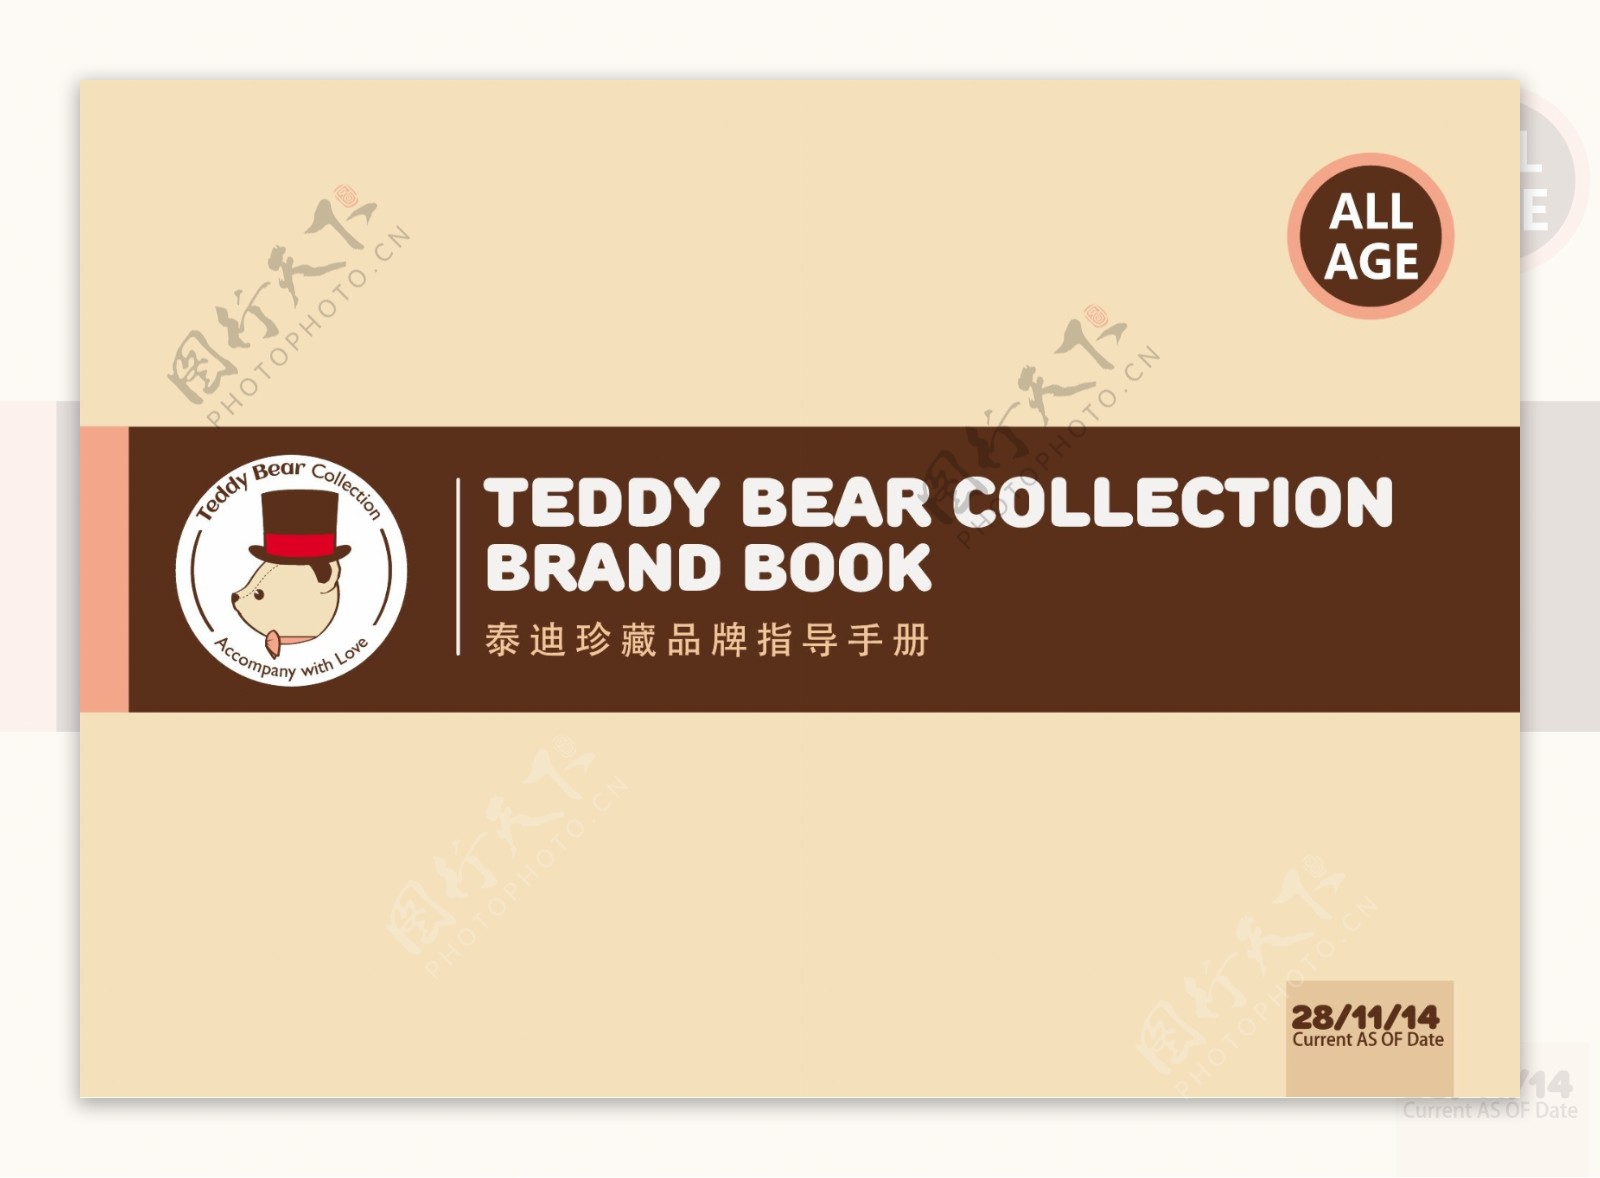 teddybear矢量泰迪